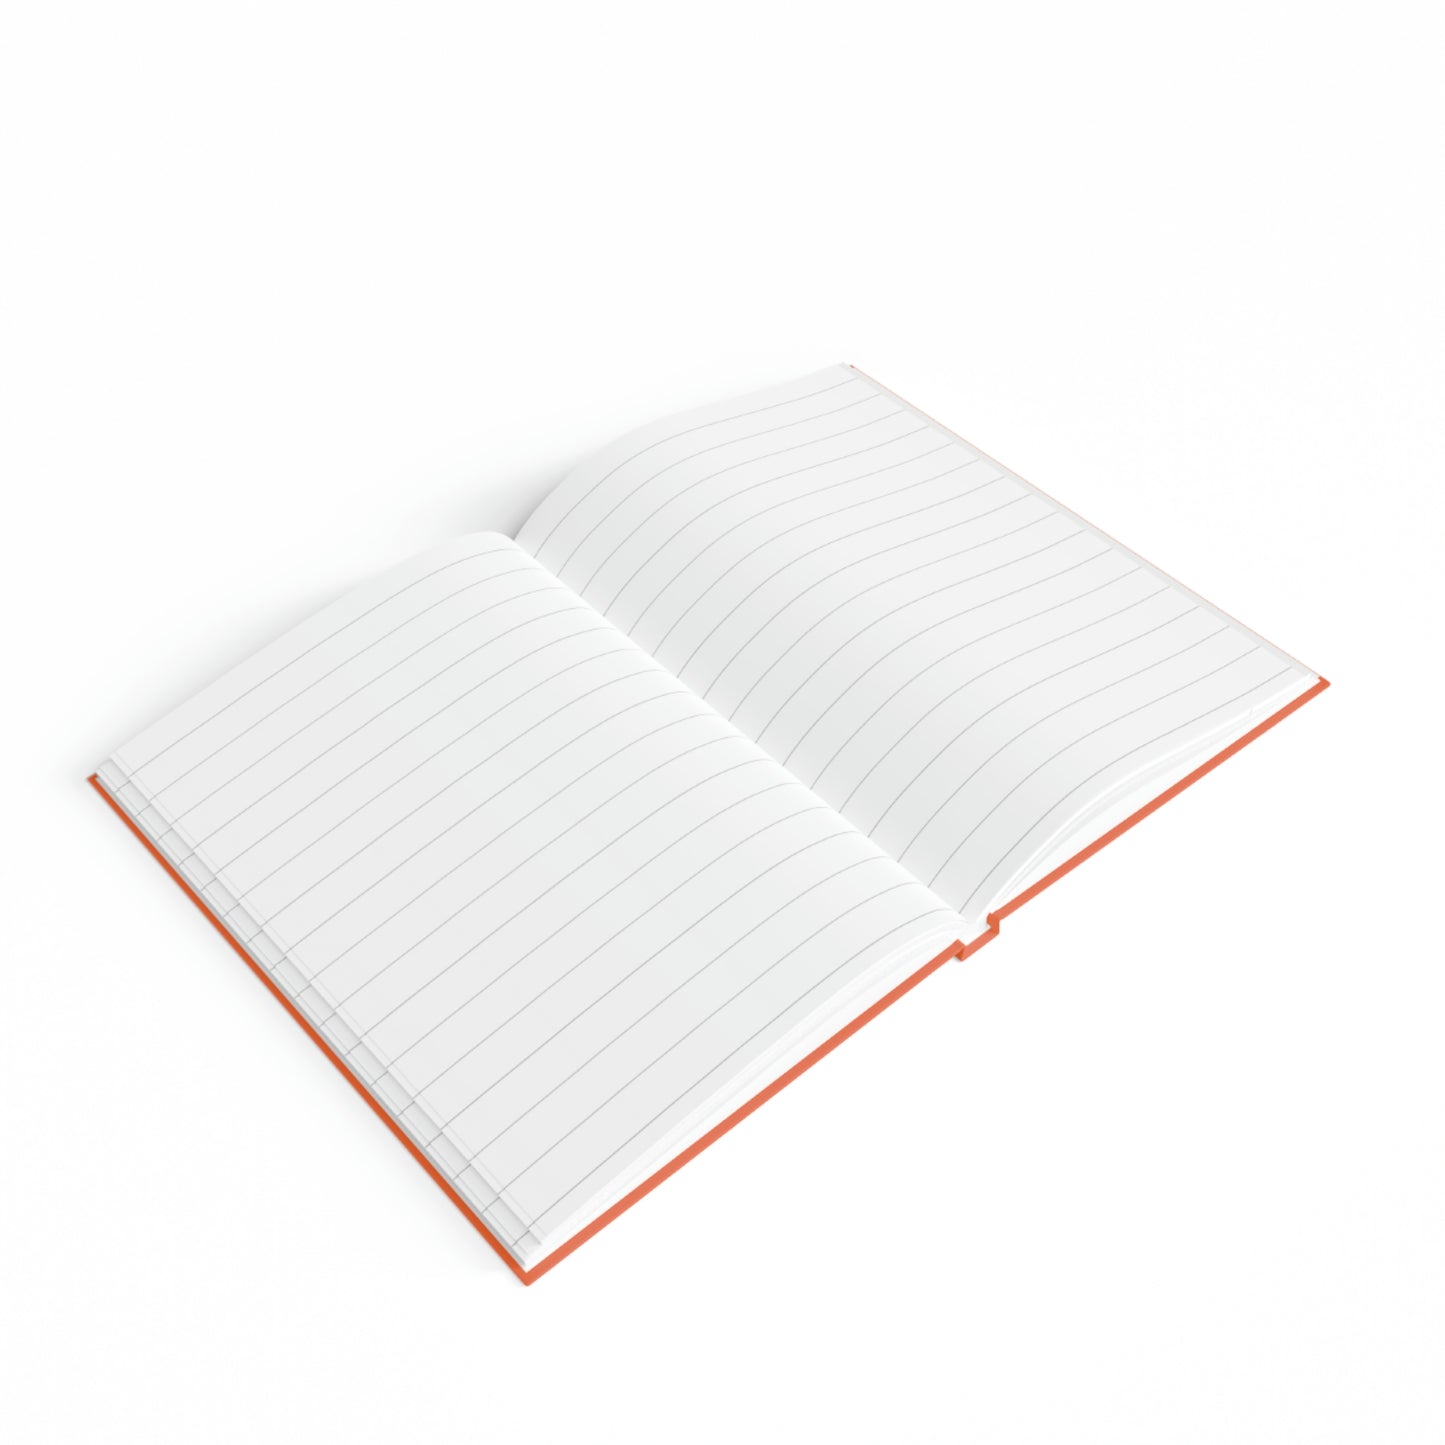 Sacred Geometry - Hardcover Journal - Ruled Line - Orange Cover